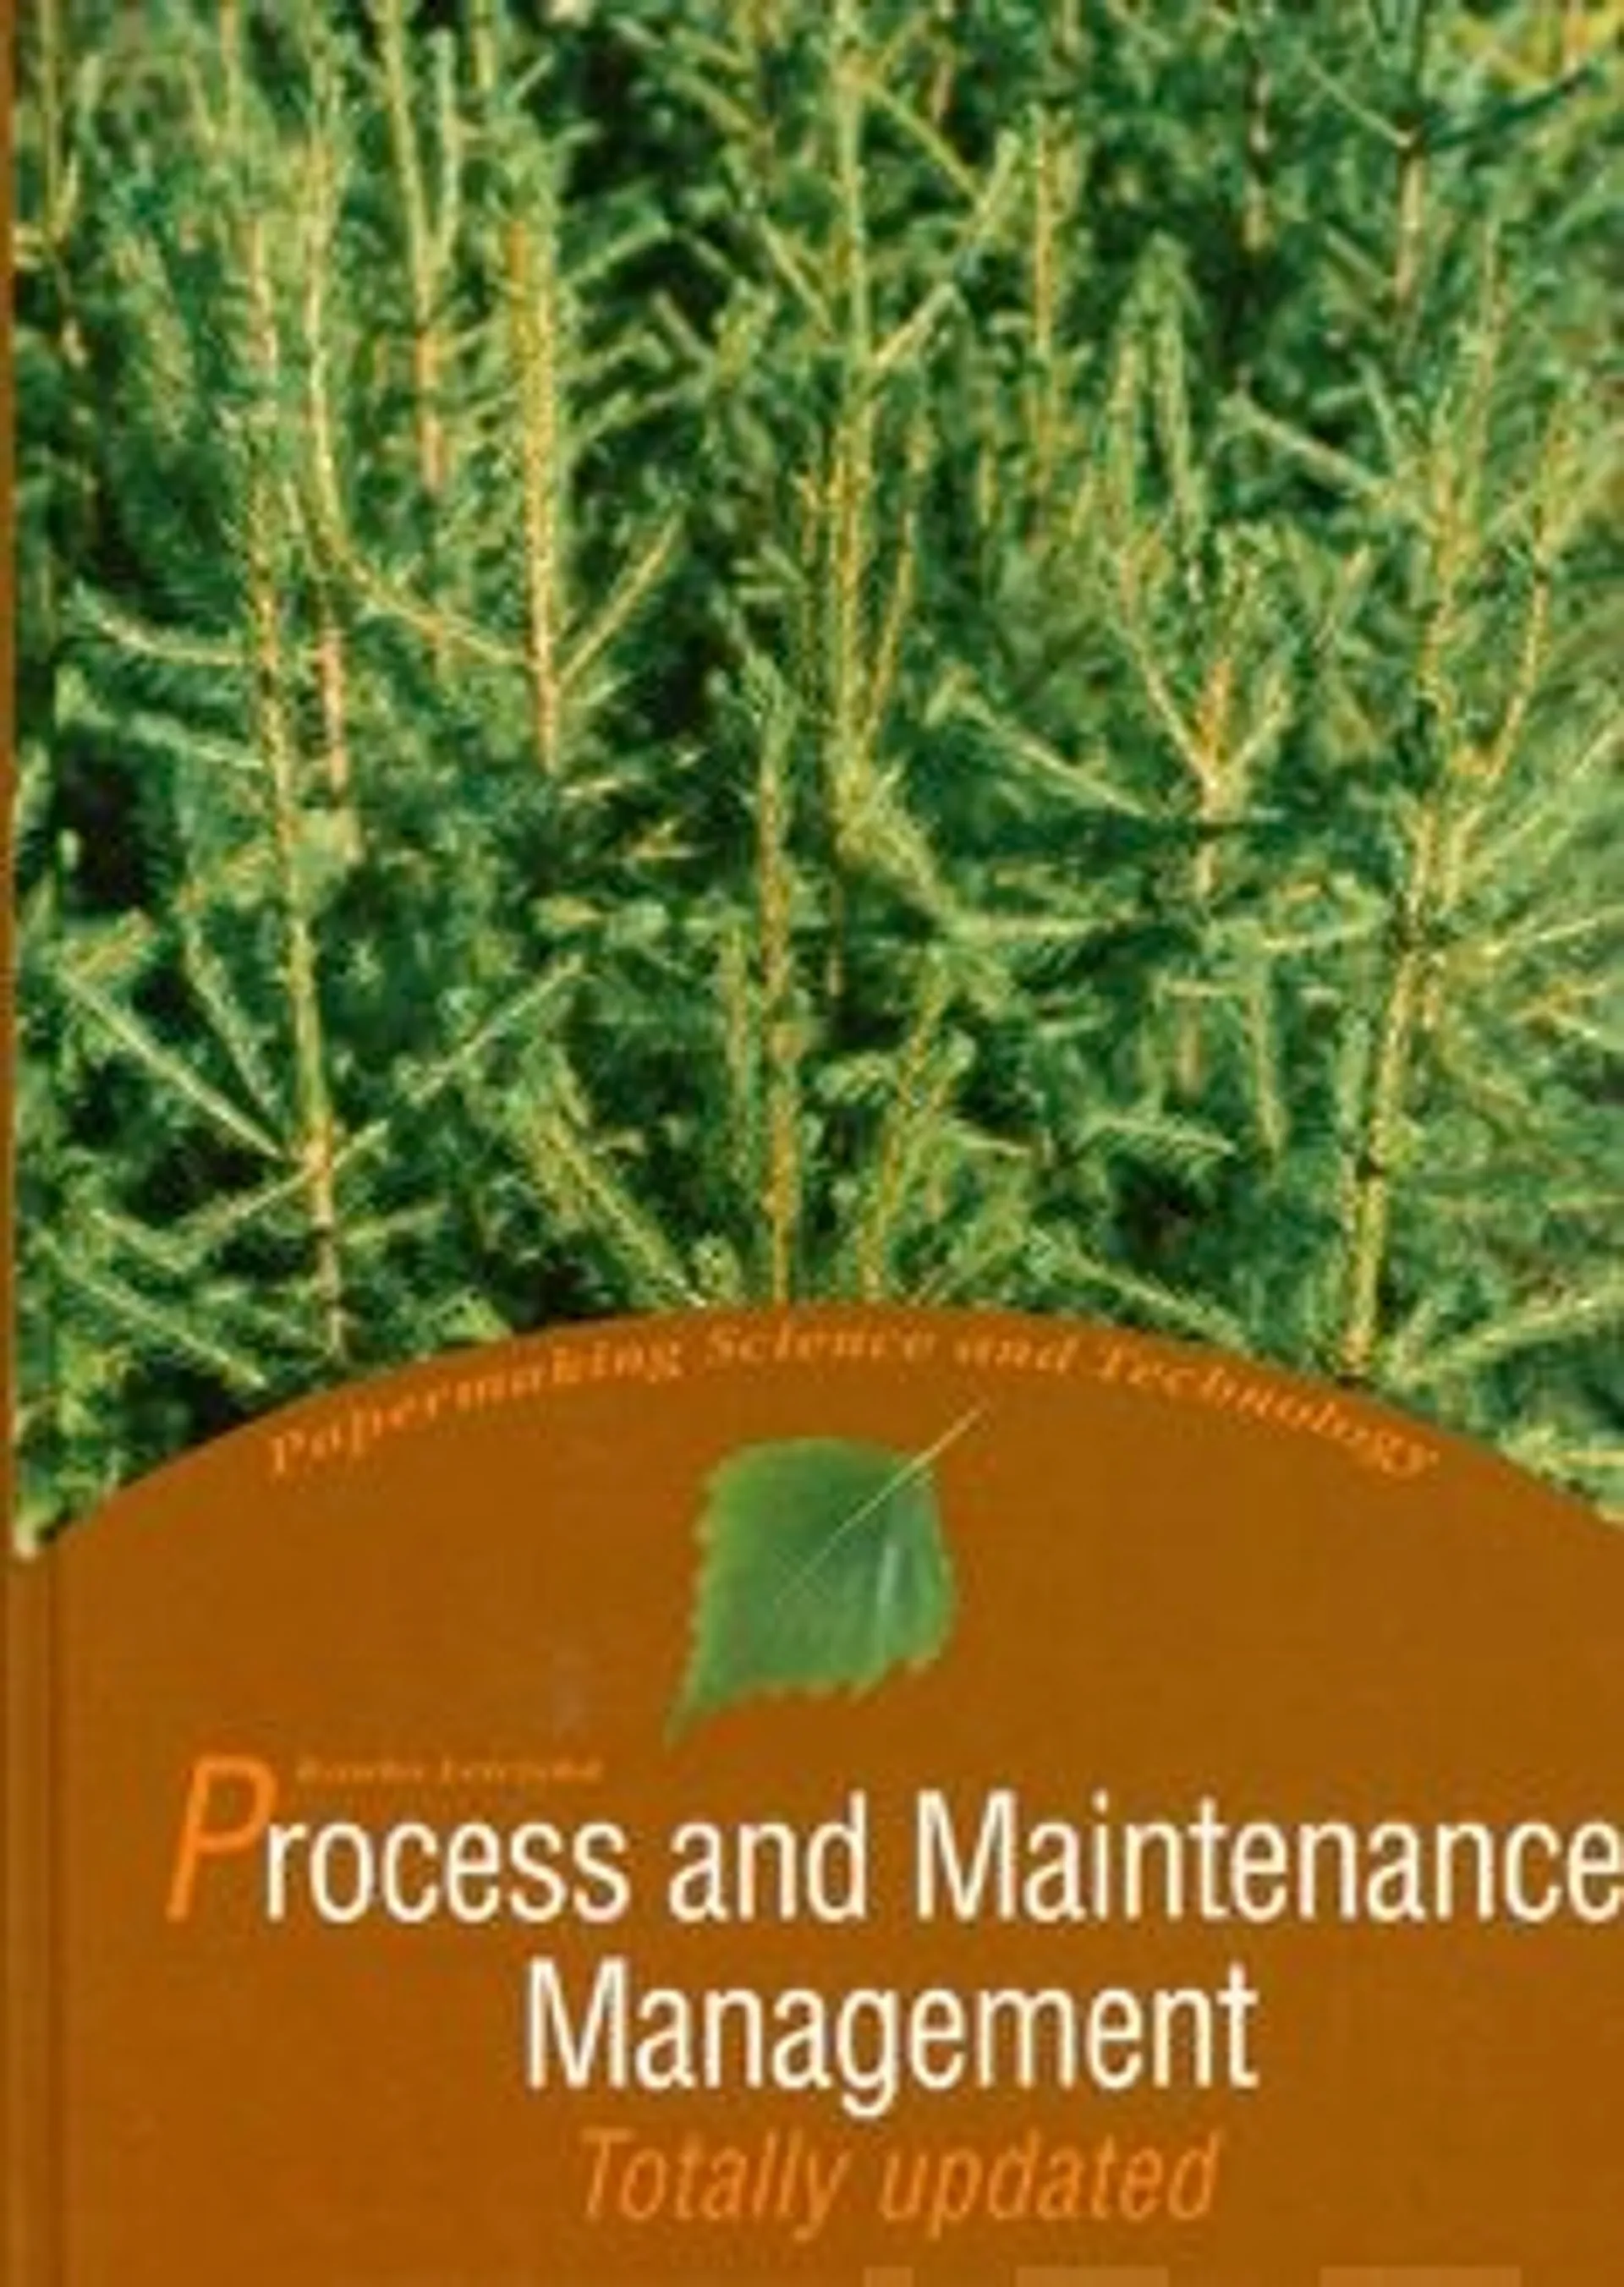 Process and maintenance management